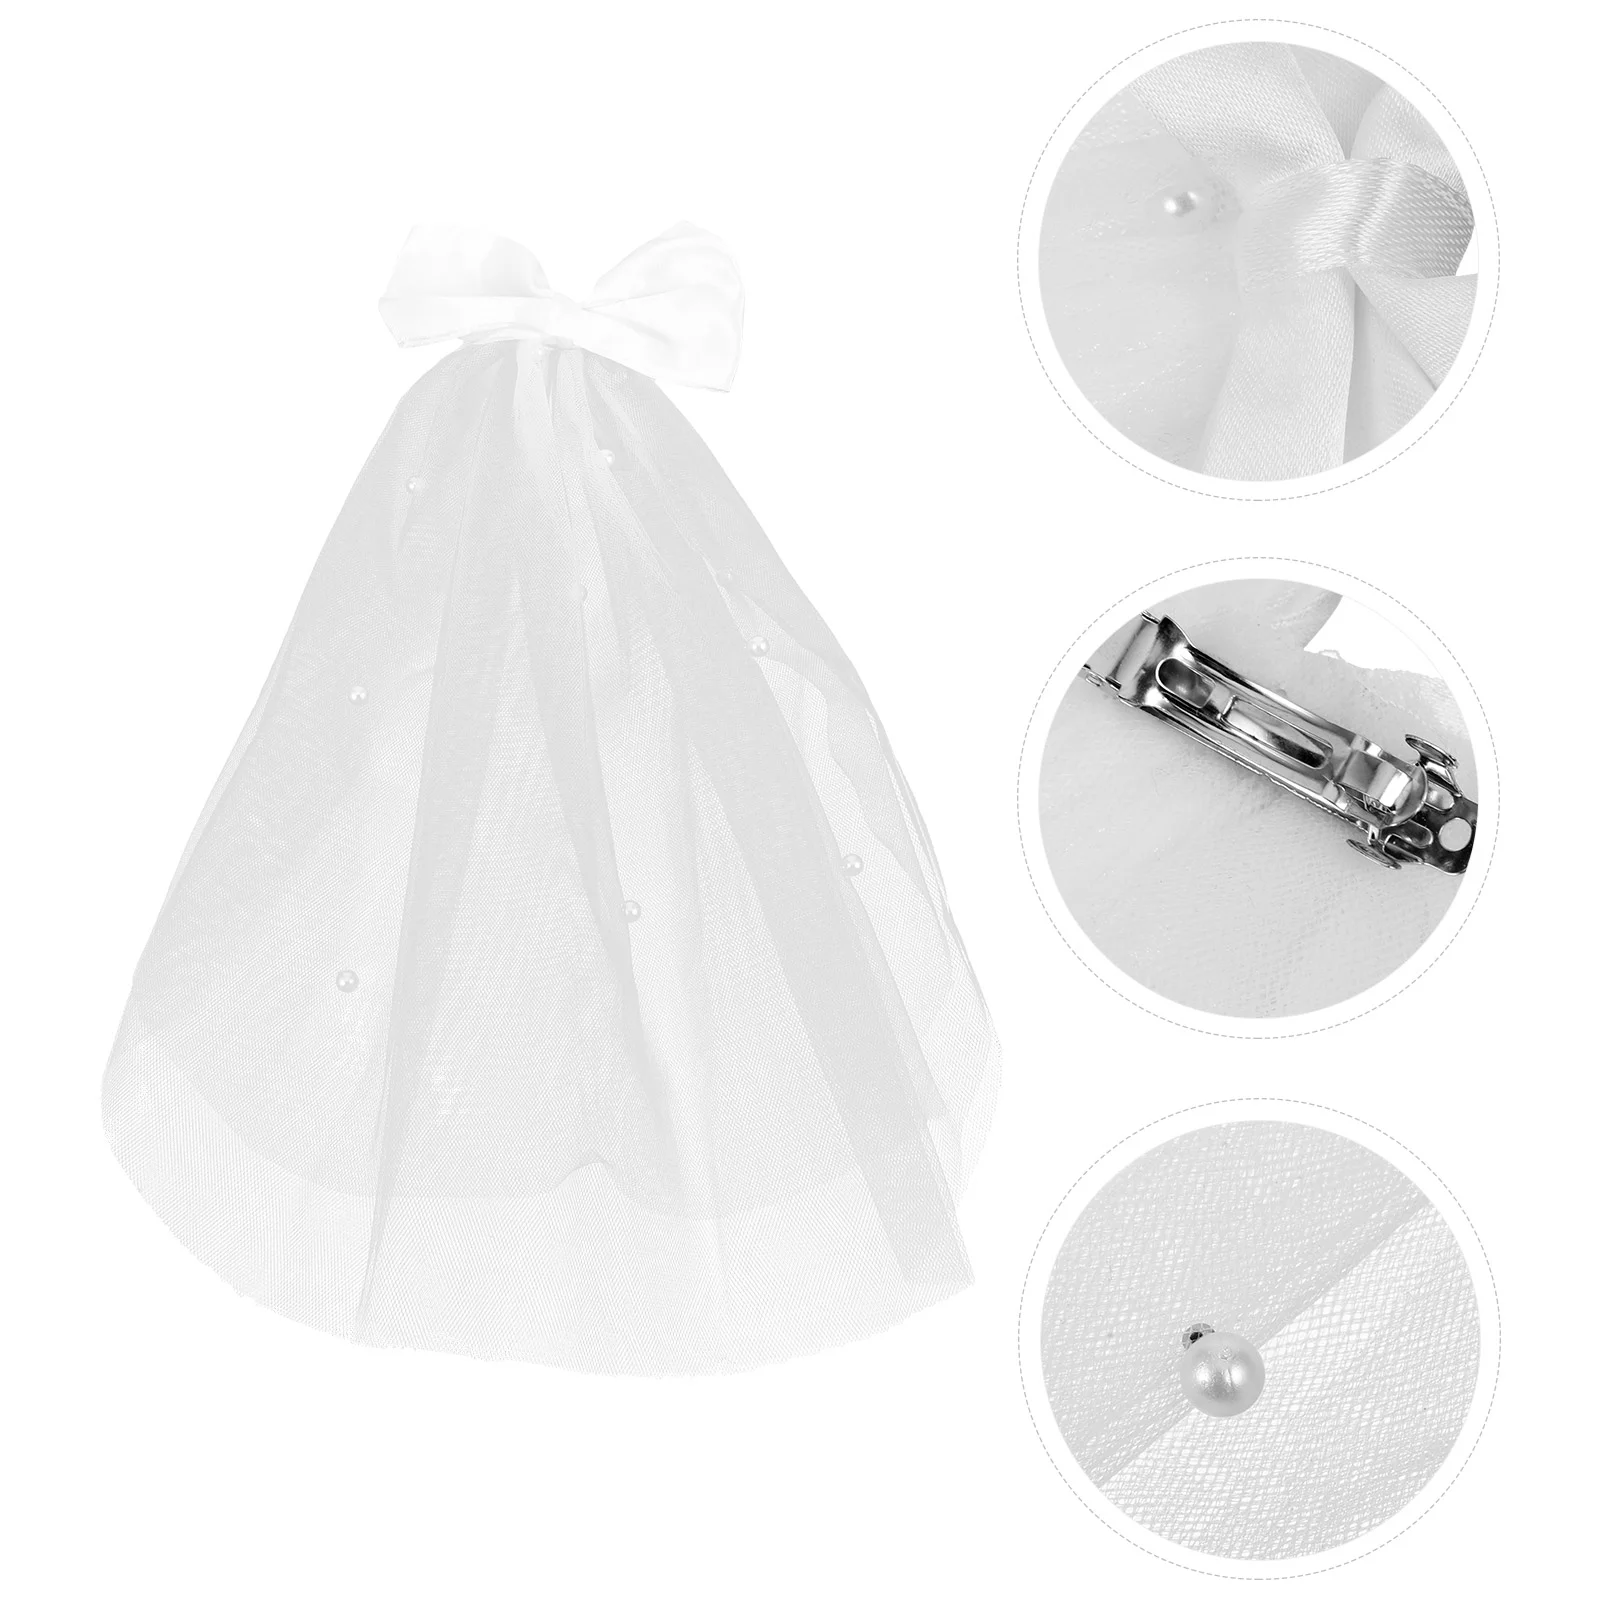 

Pet Veil Hair Decoration Wedding Dress Bride Yarn Costume Headdress Accessories